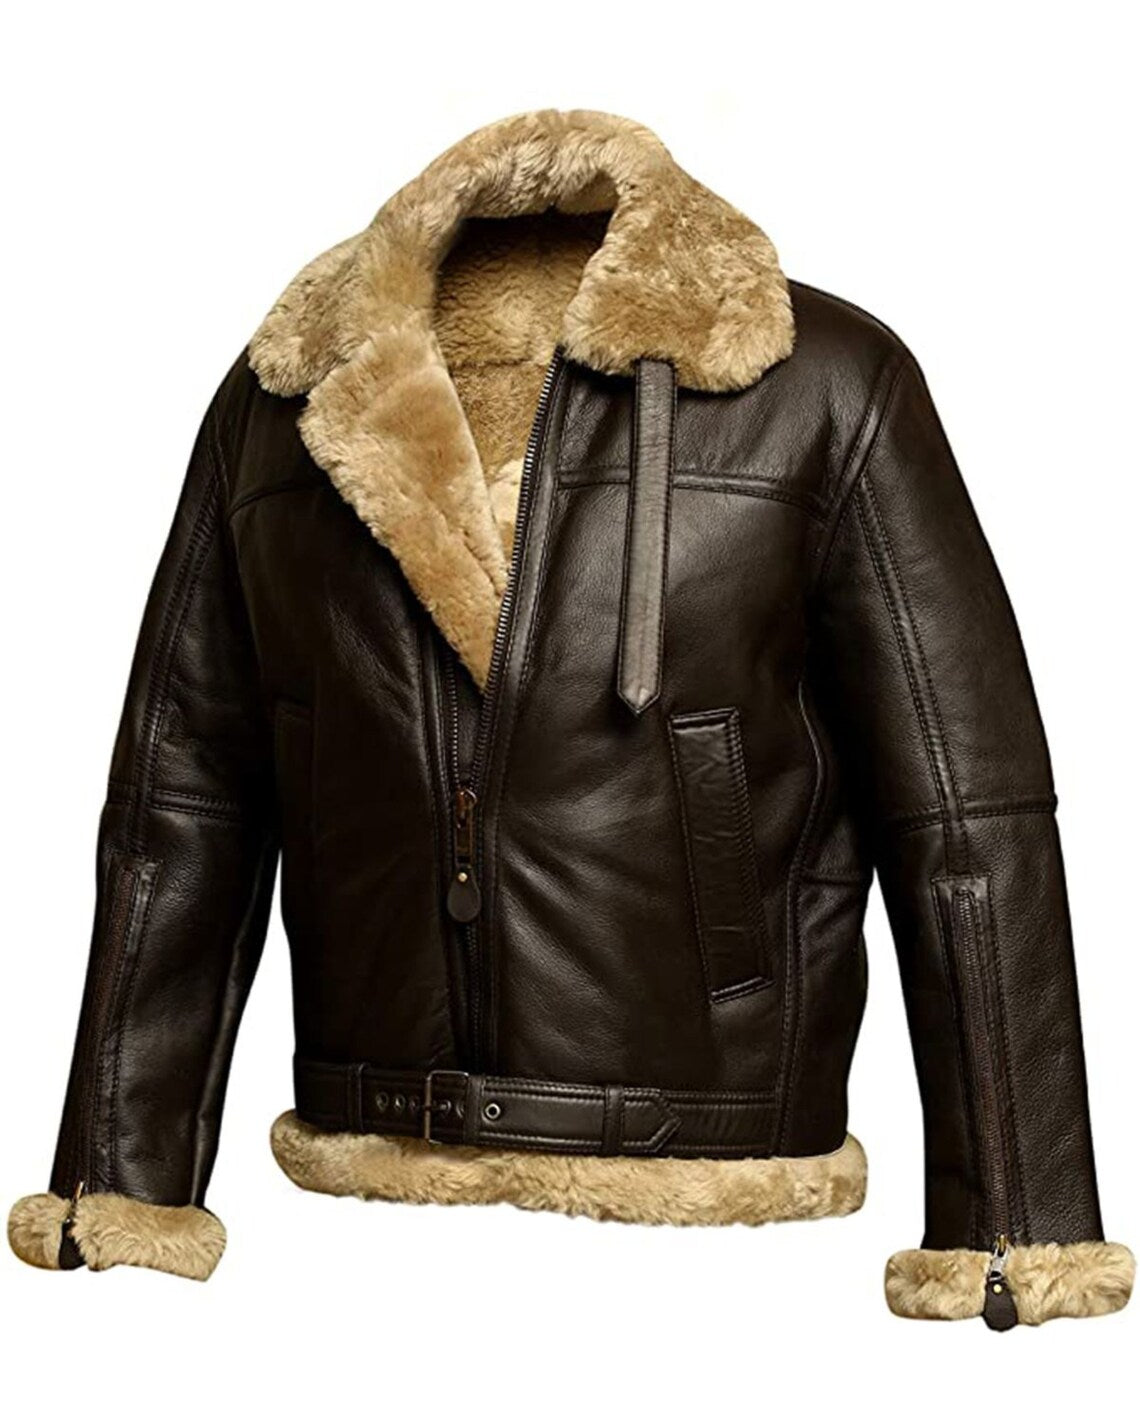 Skin Shearling Fur-Lined Black Leather Jacket